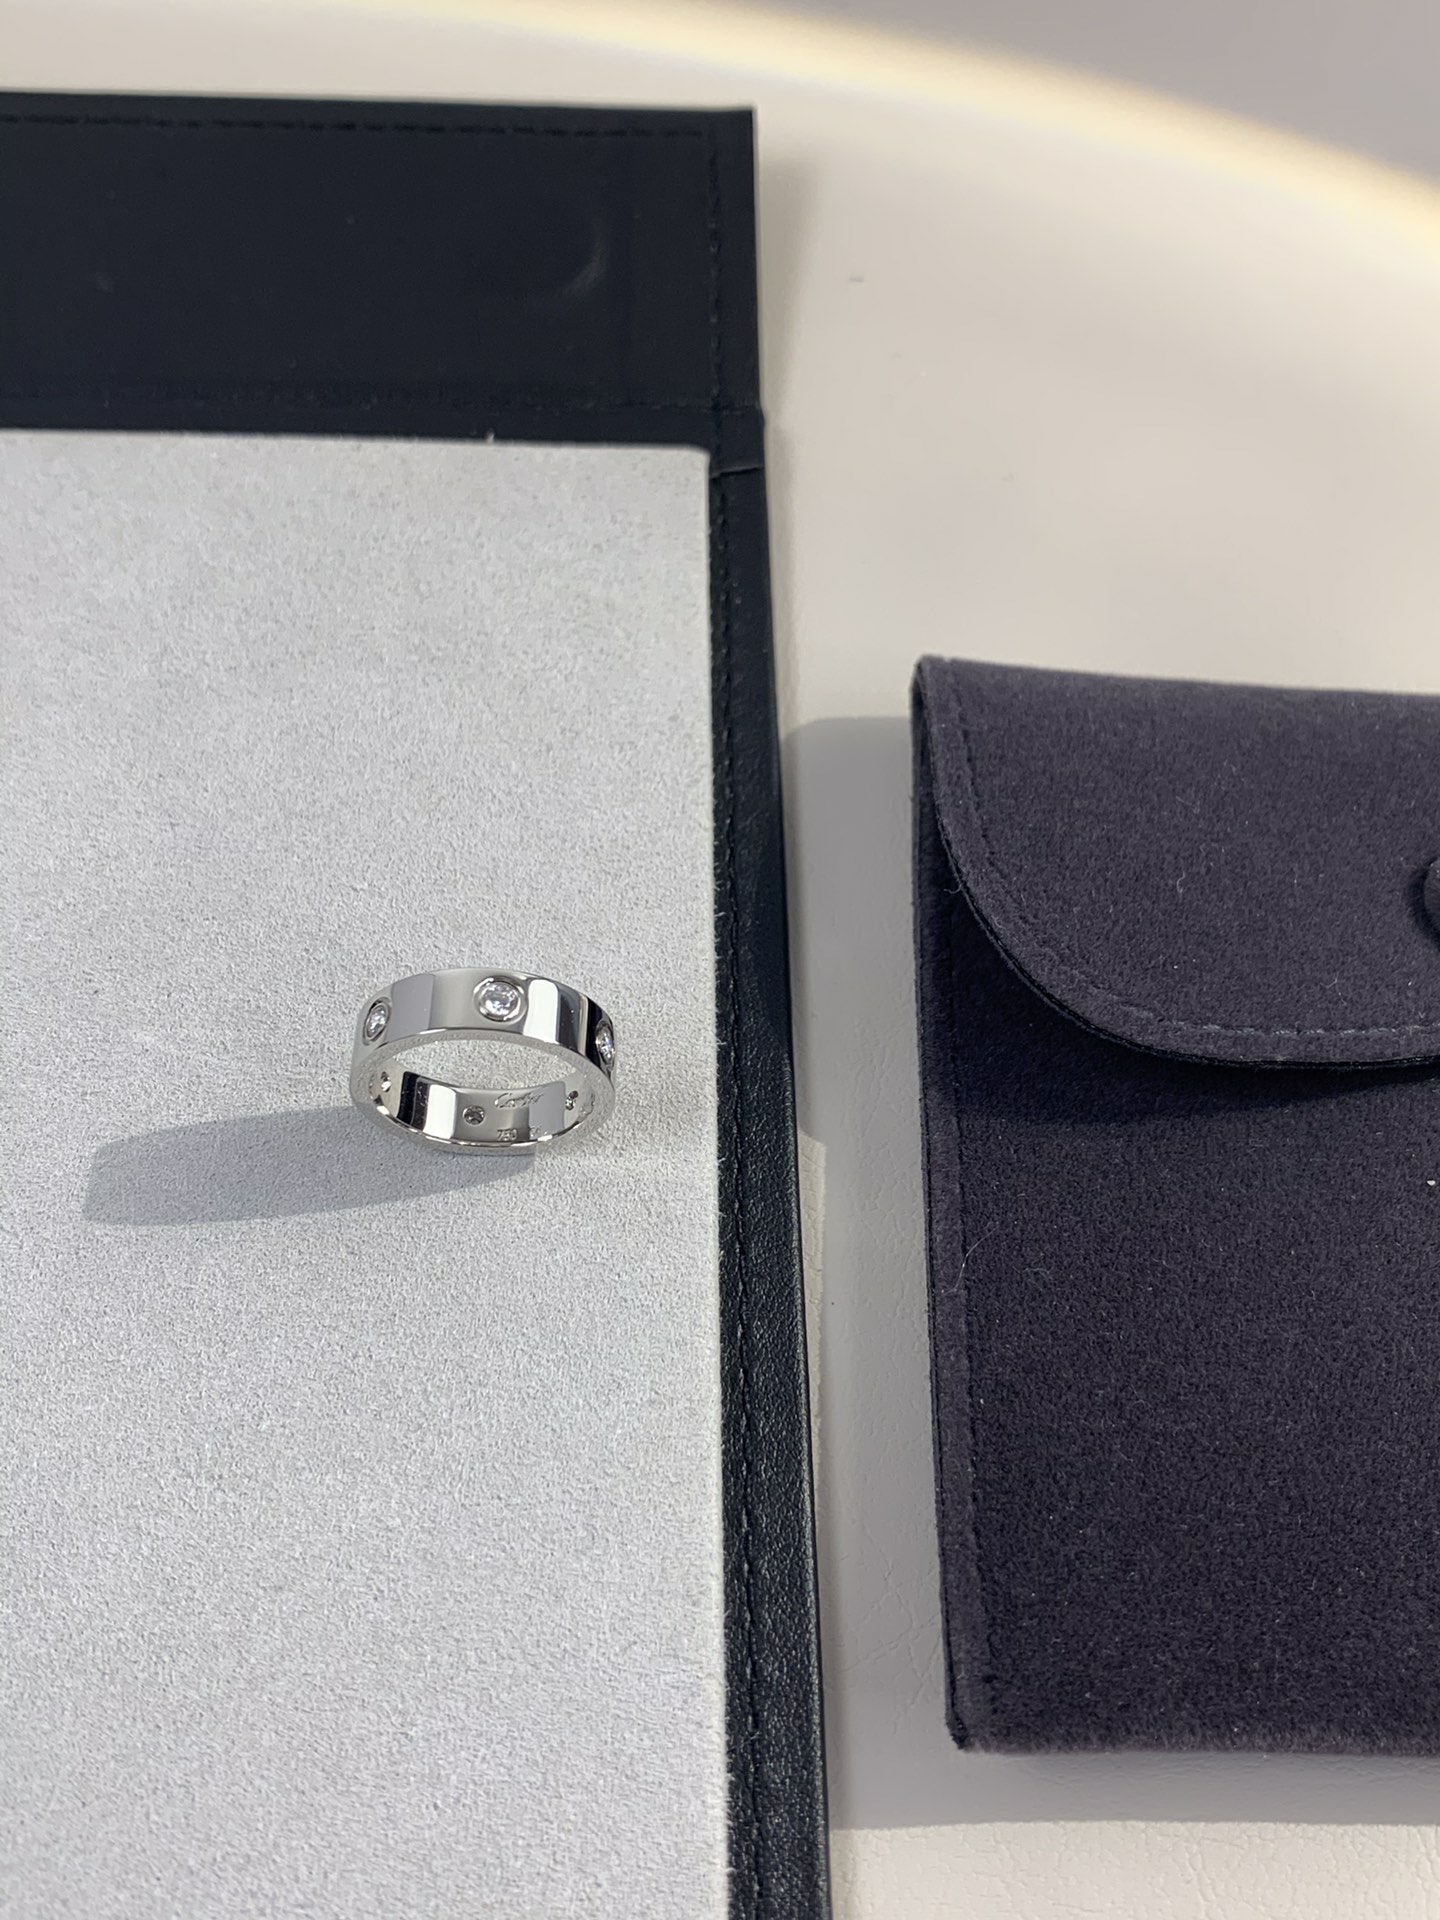 Jewelry Bracelet Ring- Gold Rose Silver Unisex